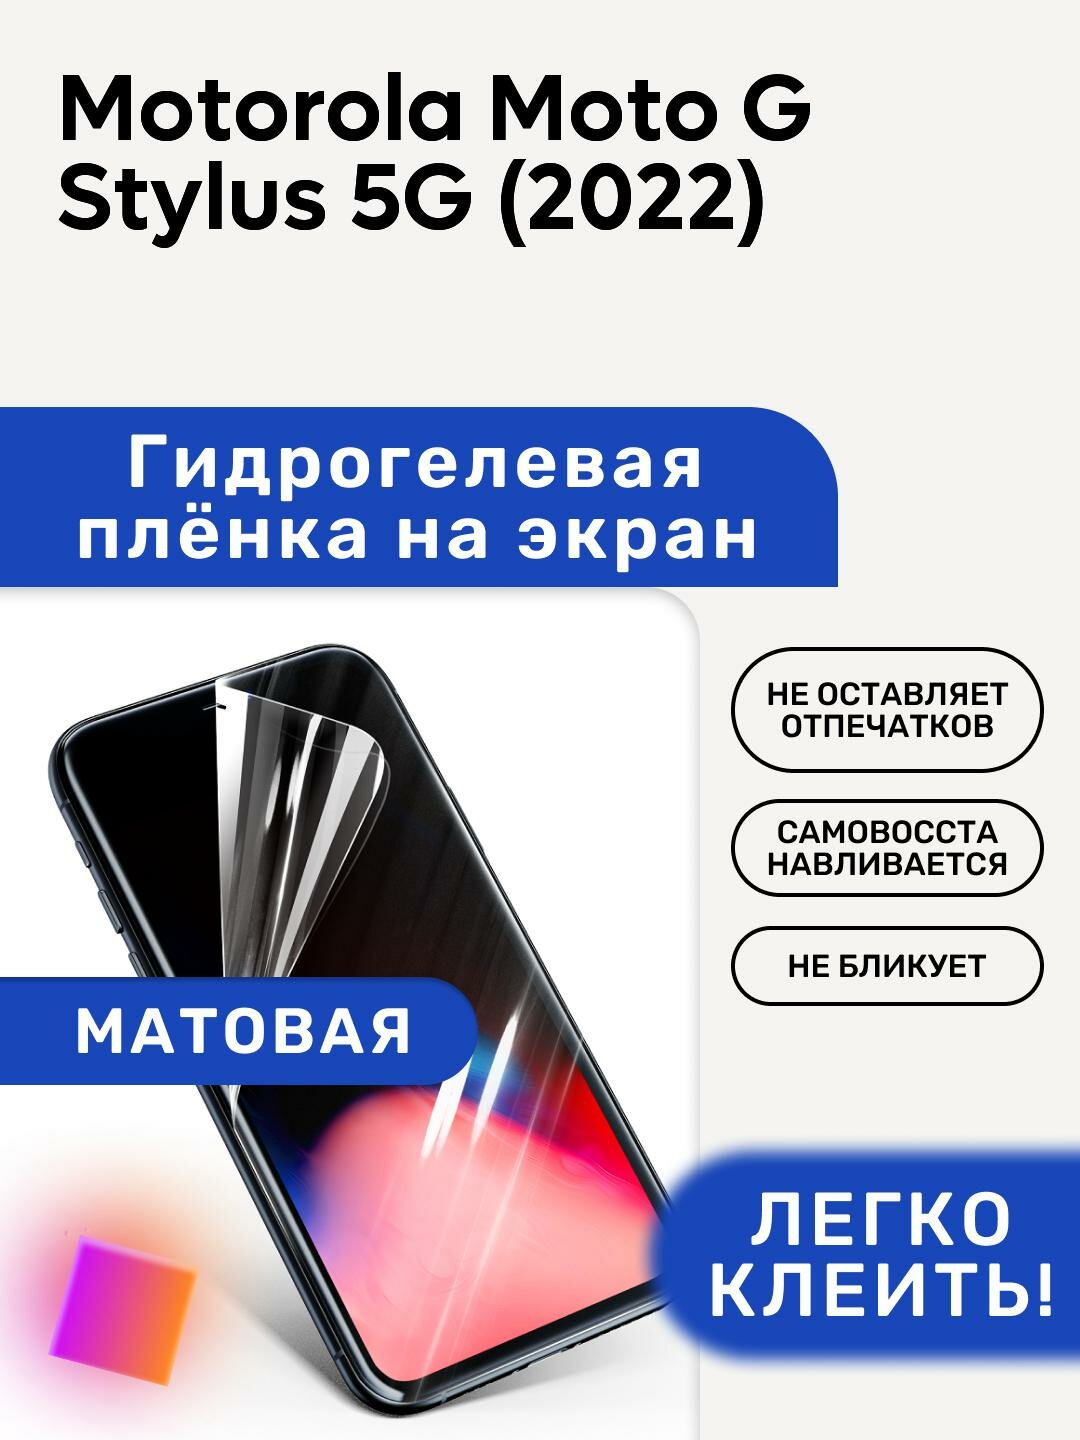 Матовая Гидрогелевая плёнка, полиуретановая, защита экрана Motorola Moto G Stylus 5G (2022)